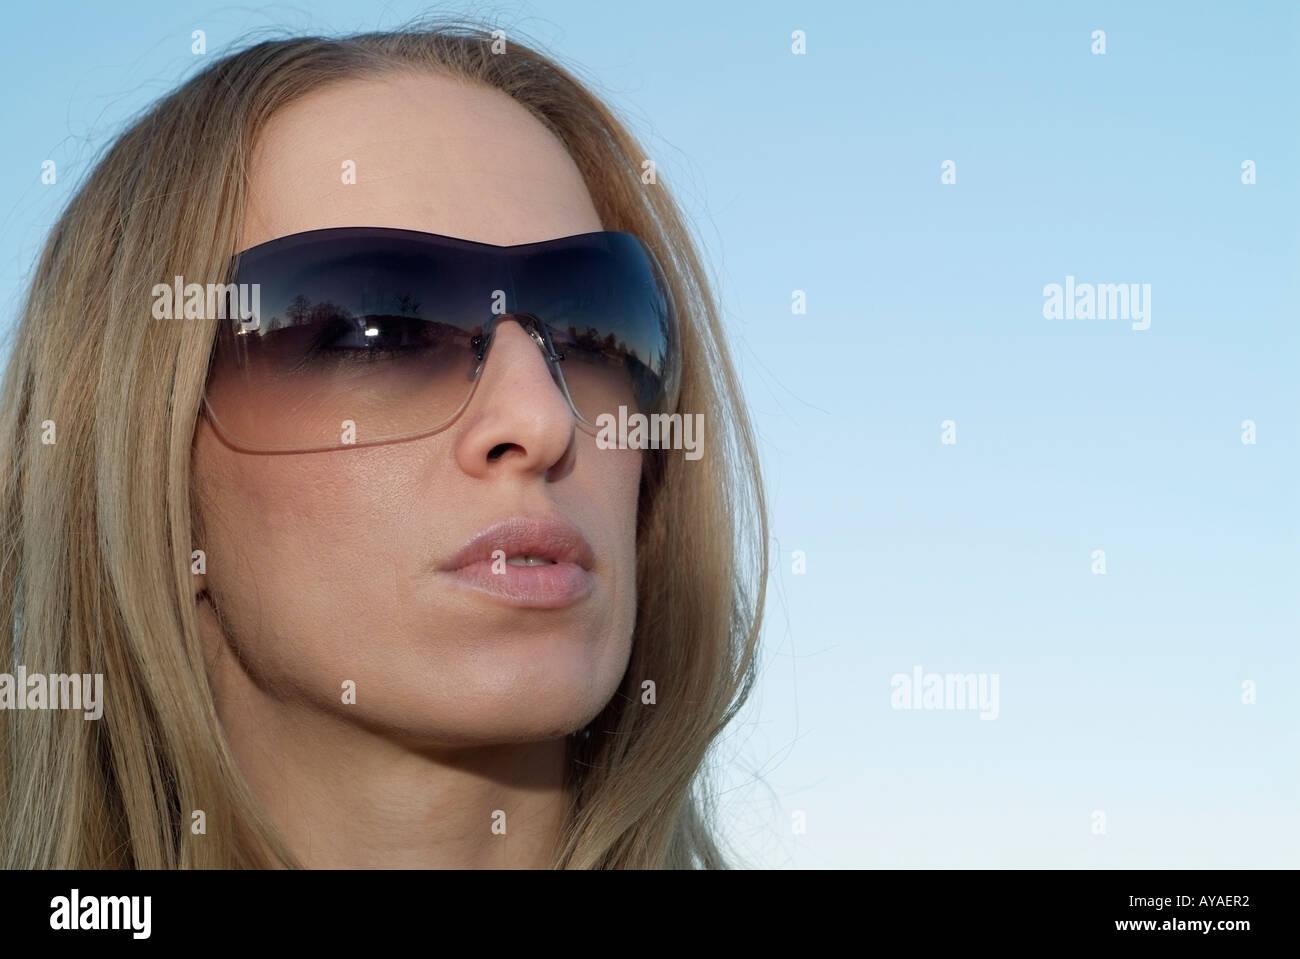 Female Wearing Sunglasses Close Up Face Shot Stock Photo